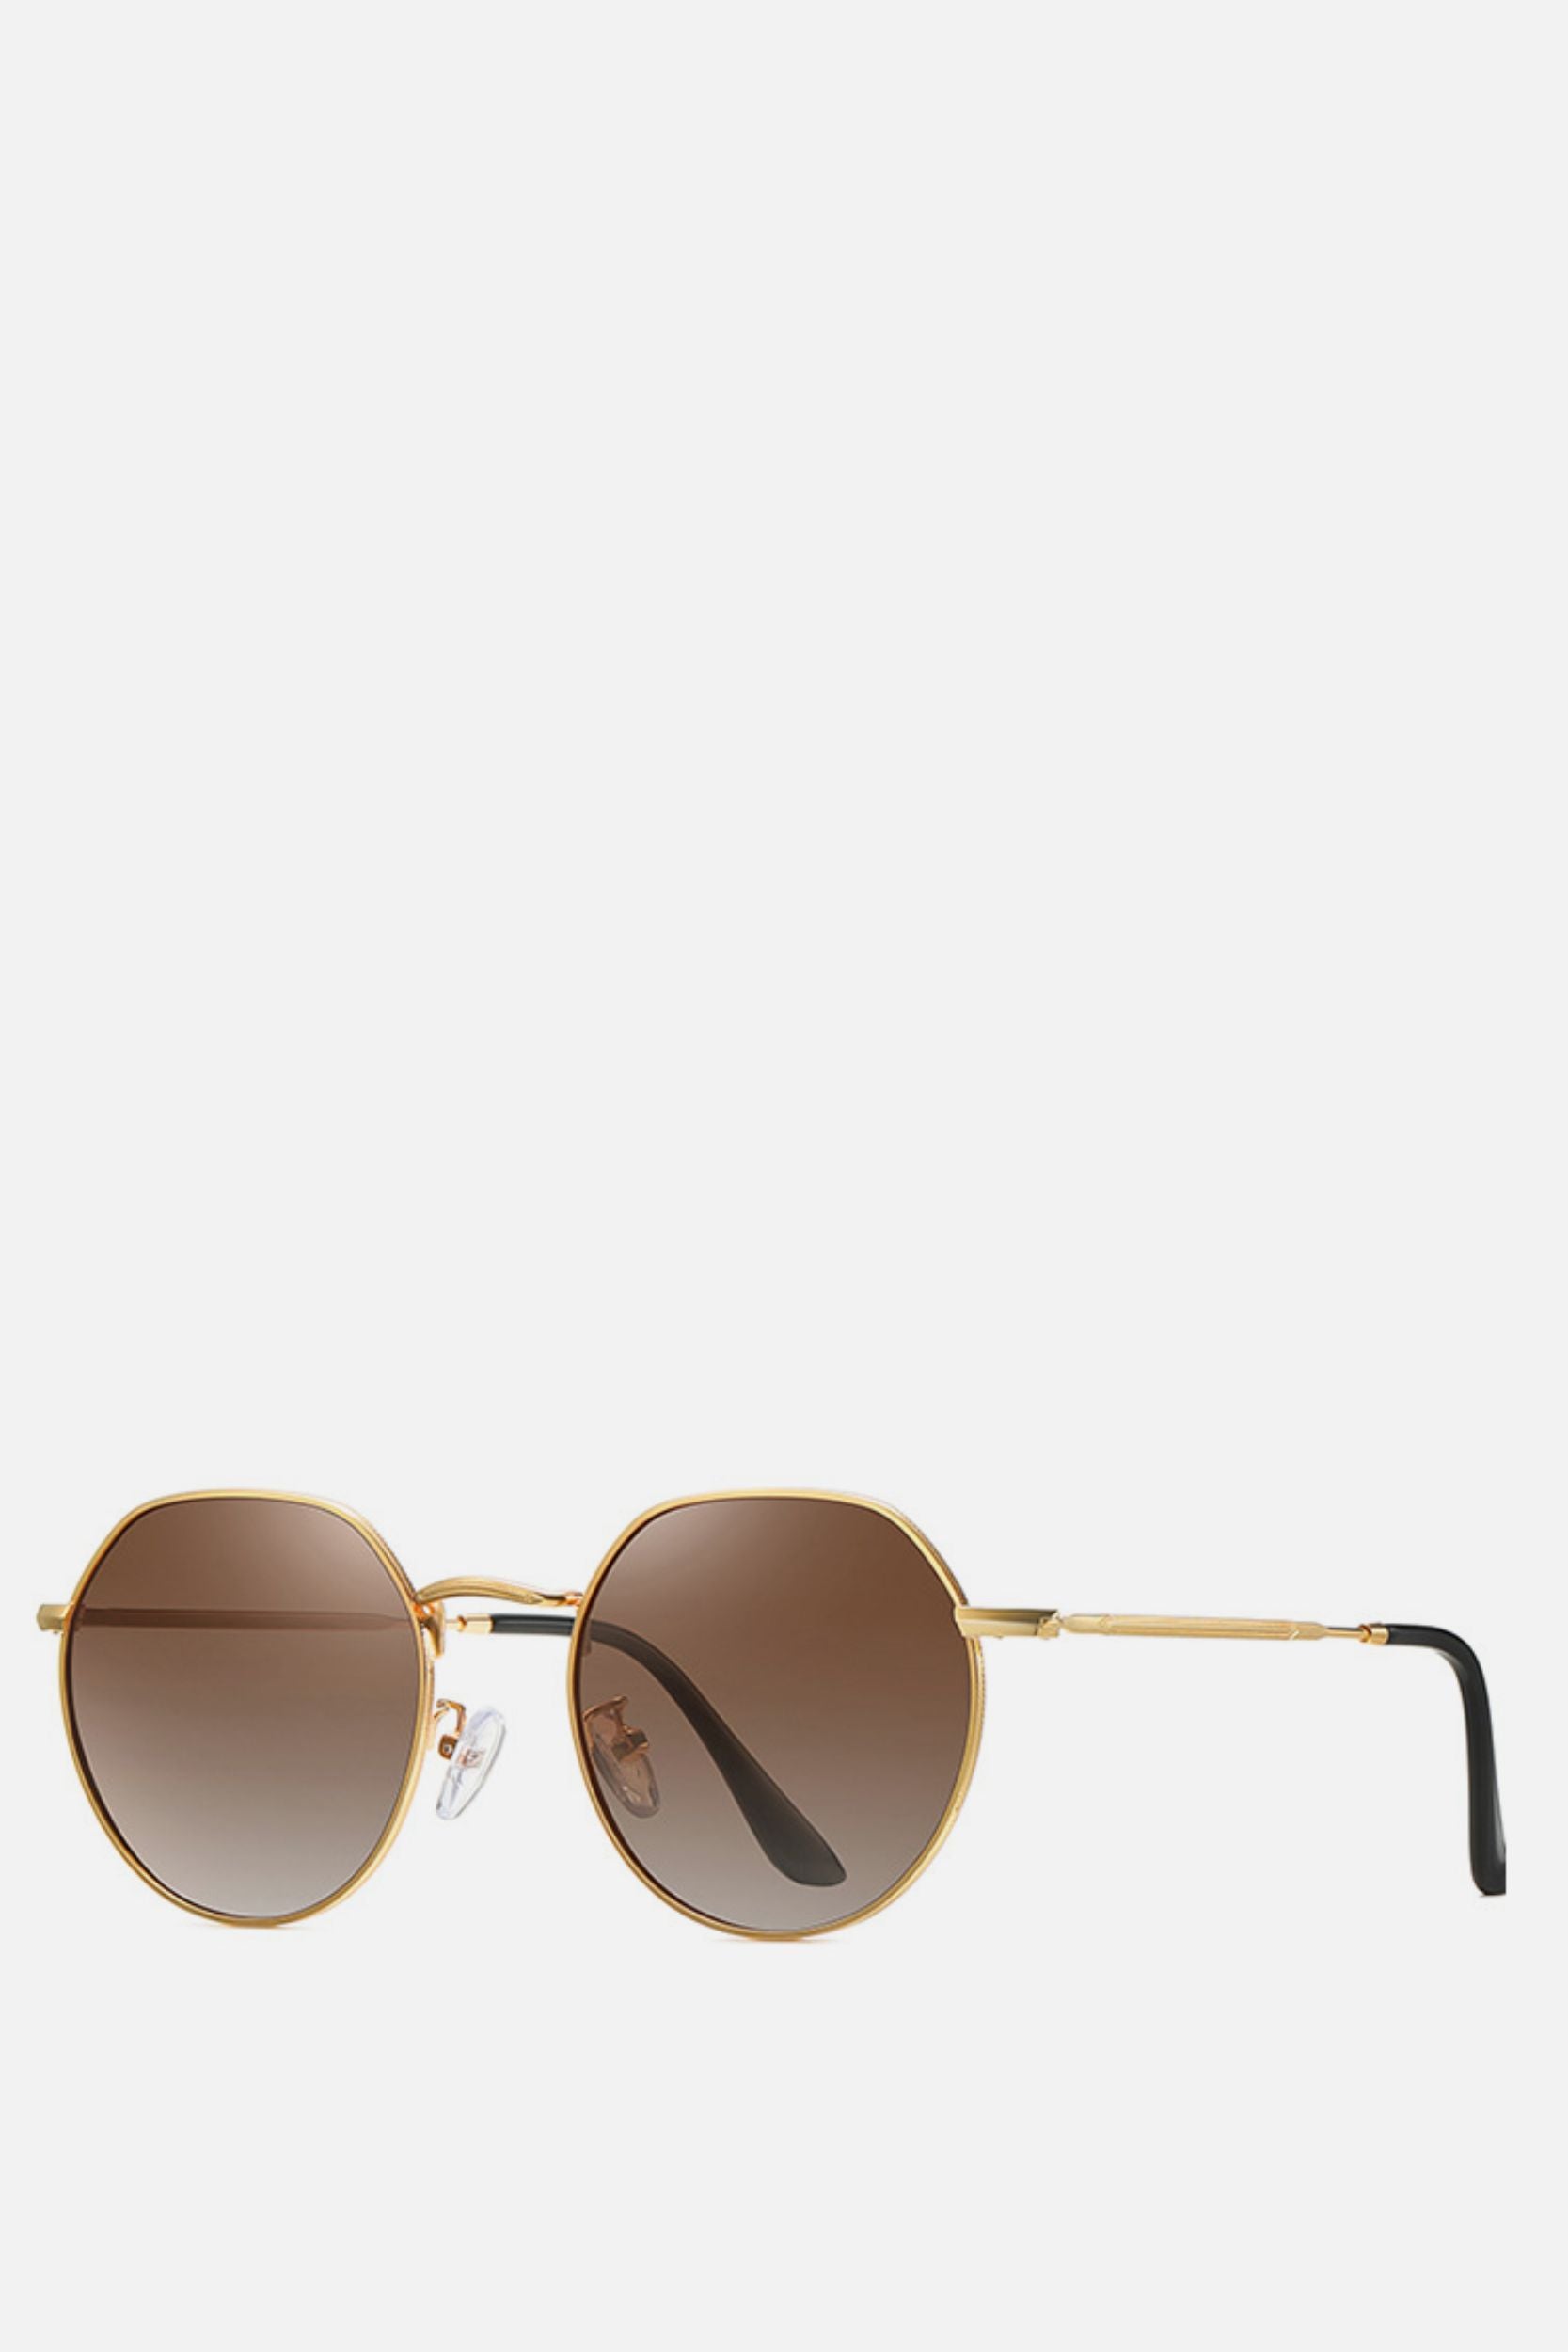 SEVILLE Brown Round Sunglasses